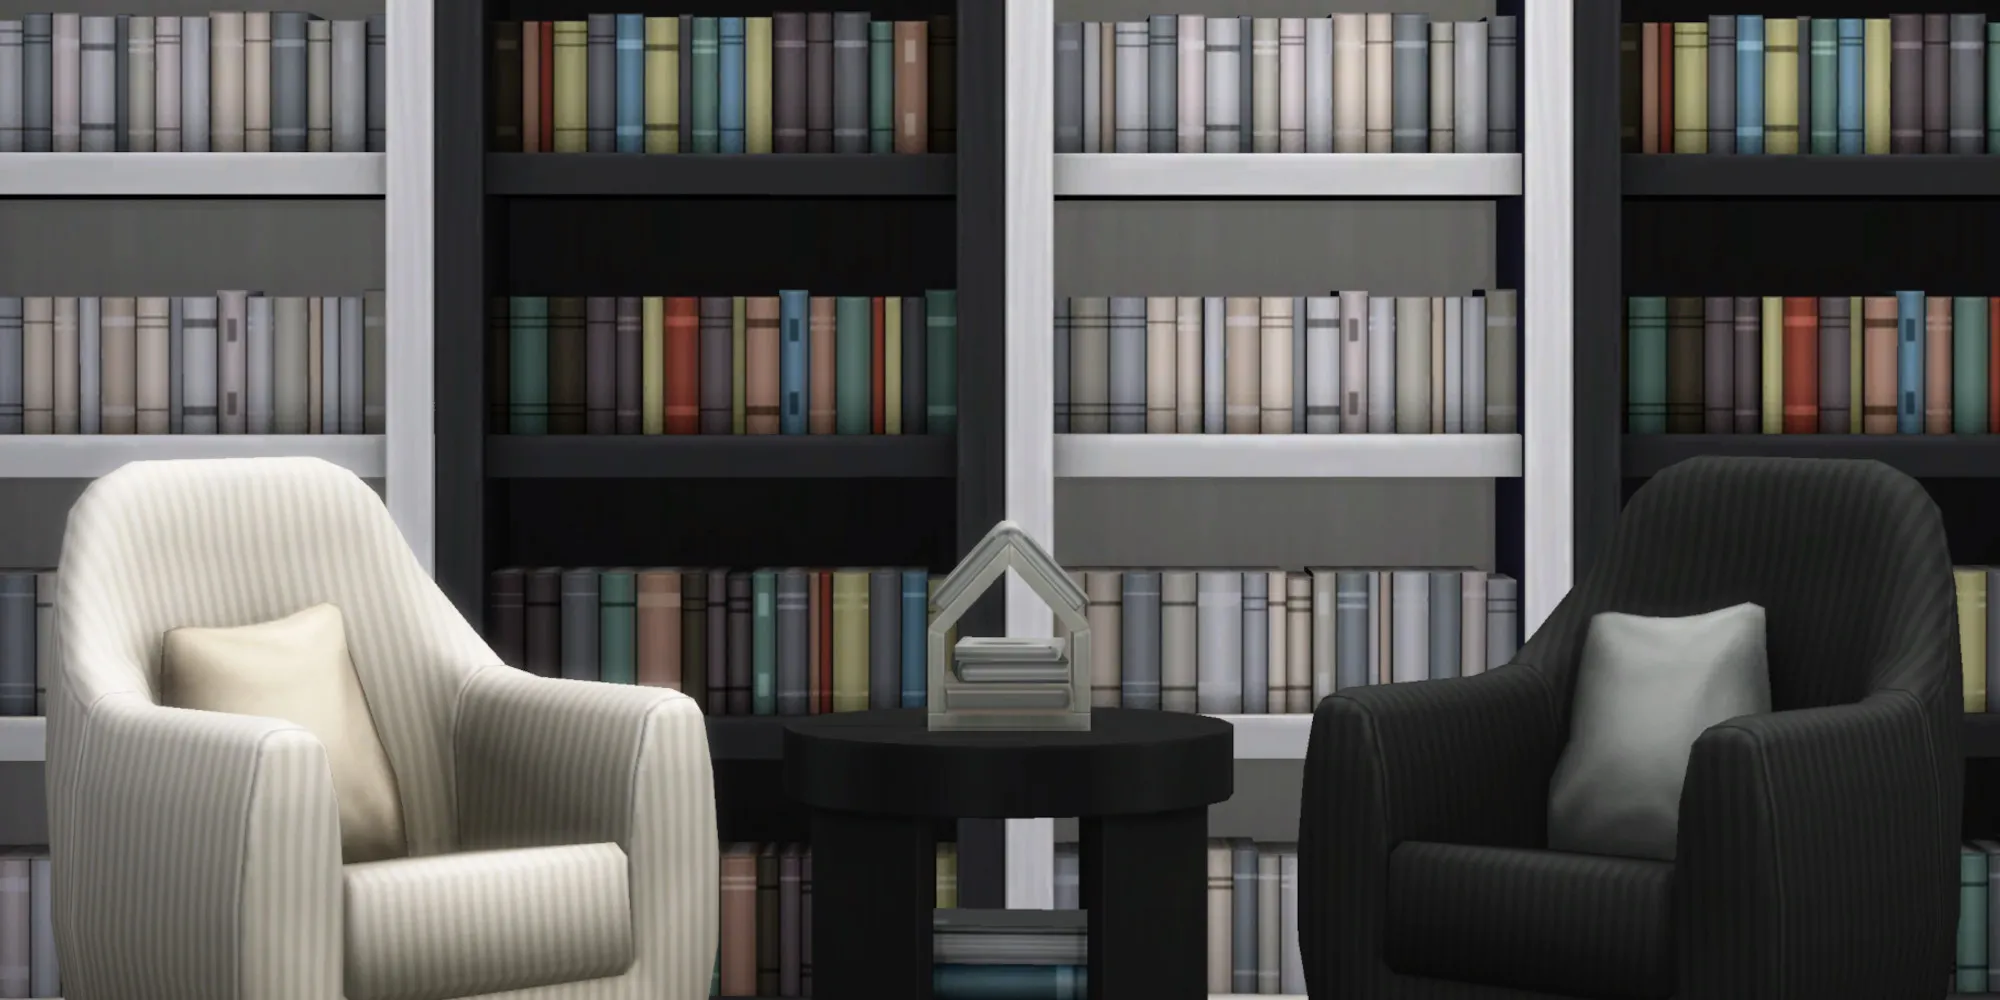 Комната в The Sims 4 со стенными полками для книг